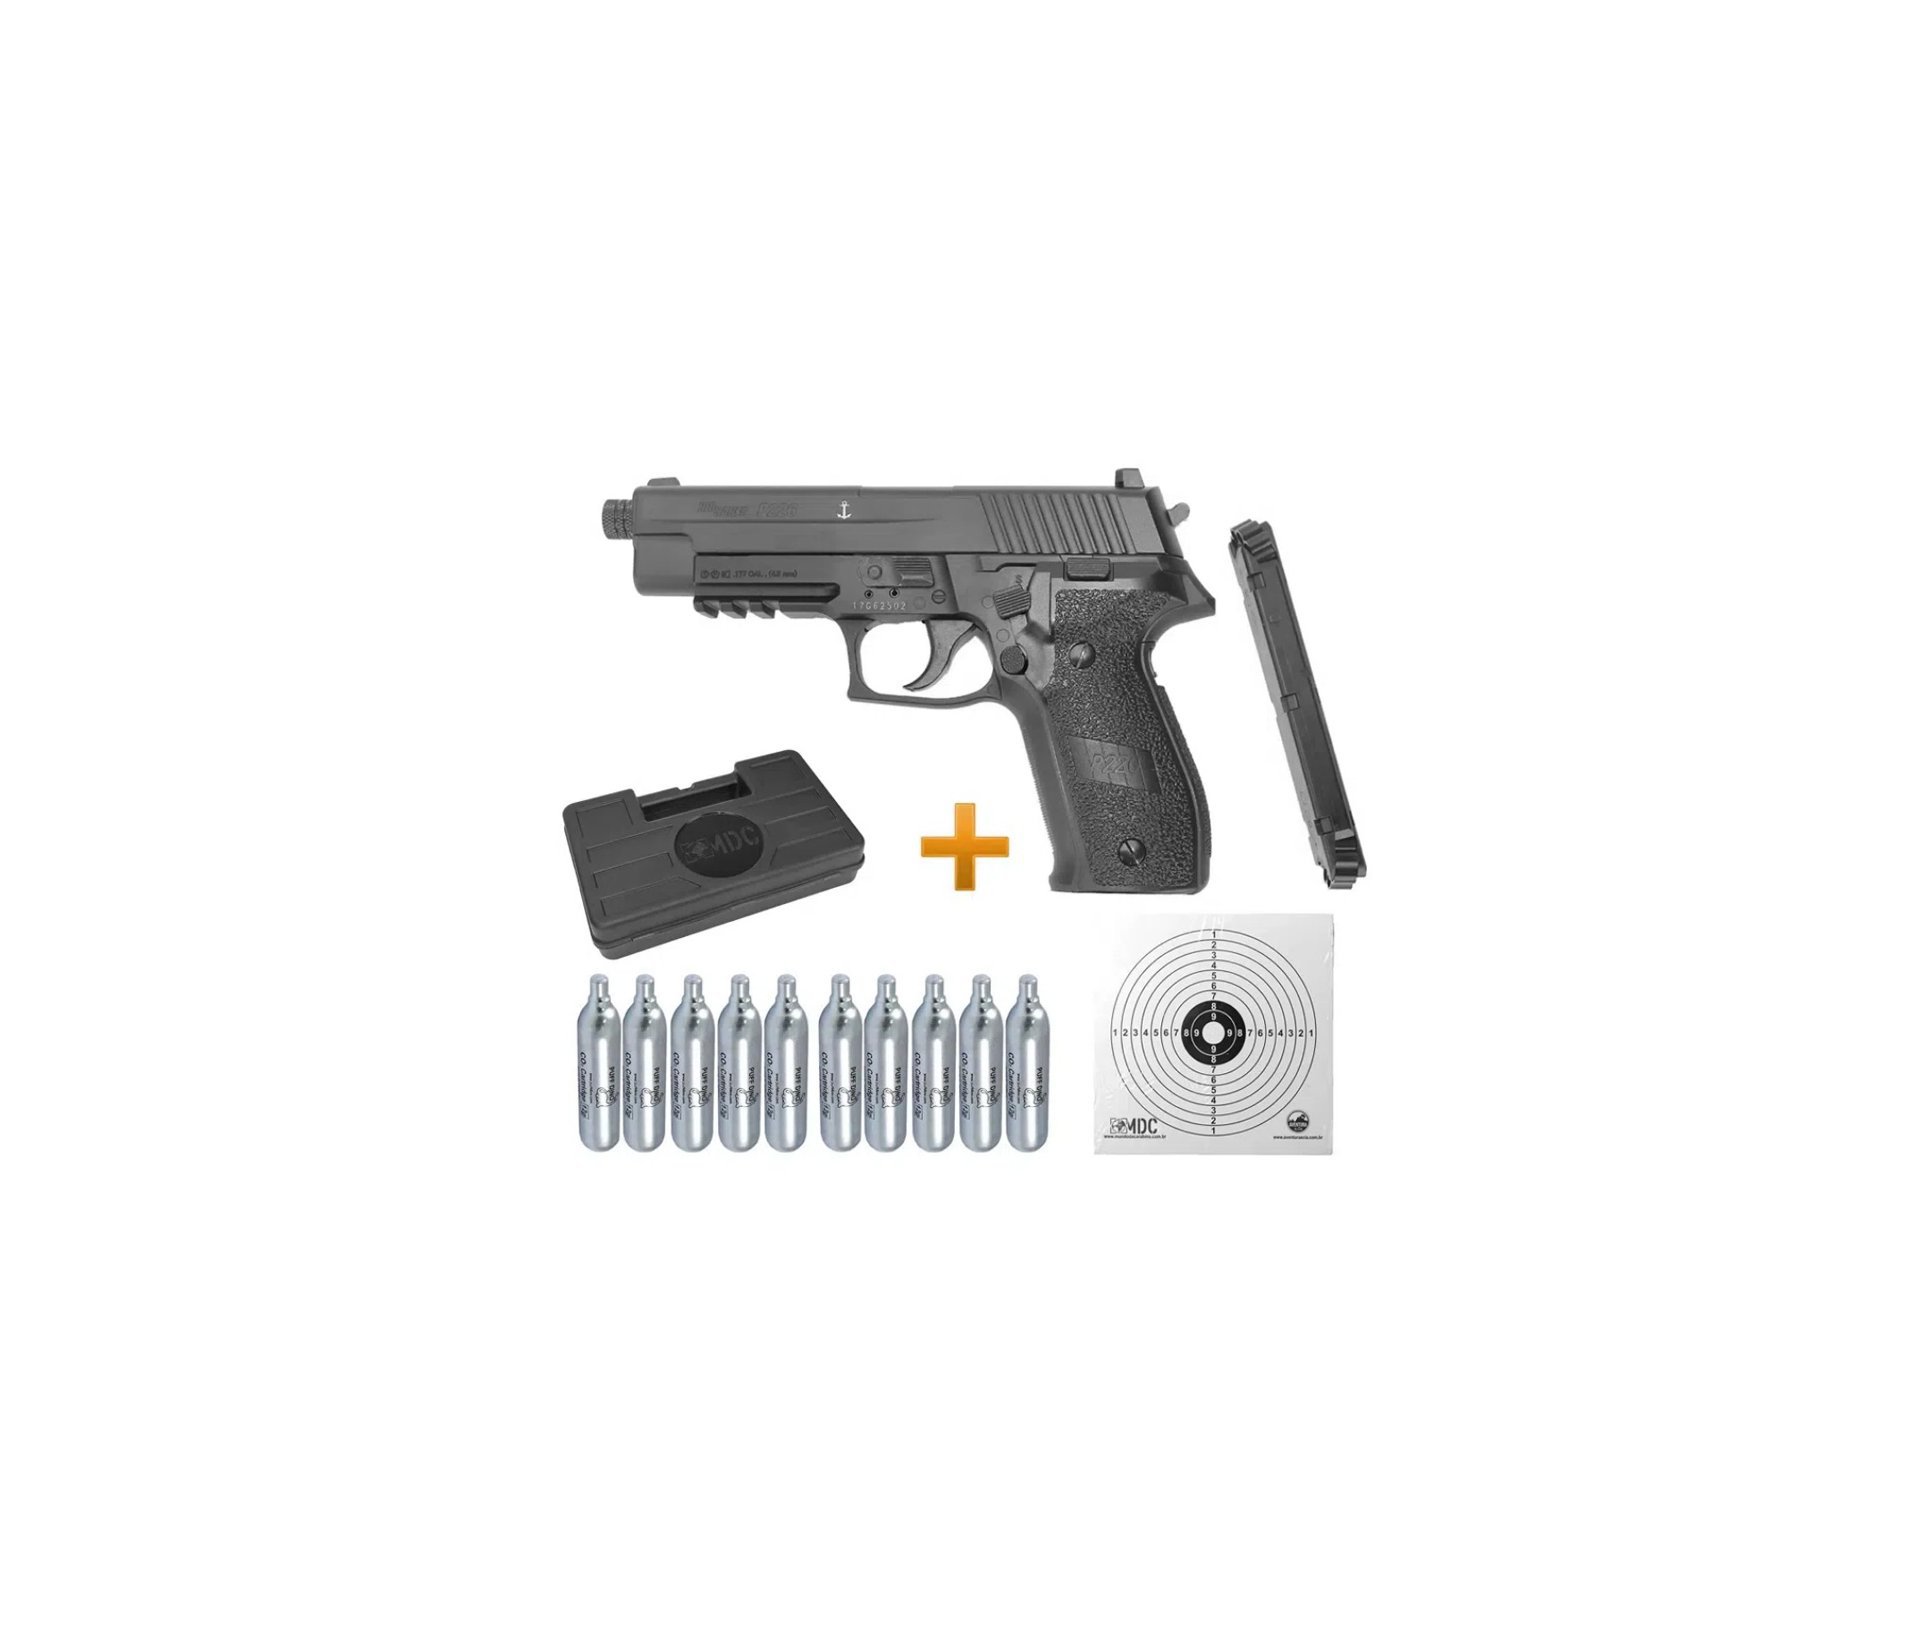 Pistola Pressão Sig Sauer P226 Co2 Full Metal Chumbinho 4,5mm 16 Tiros (8+8) Blowback + 10 Co2 + Chumbinho + Maleta